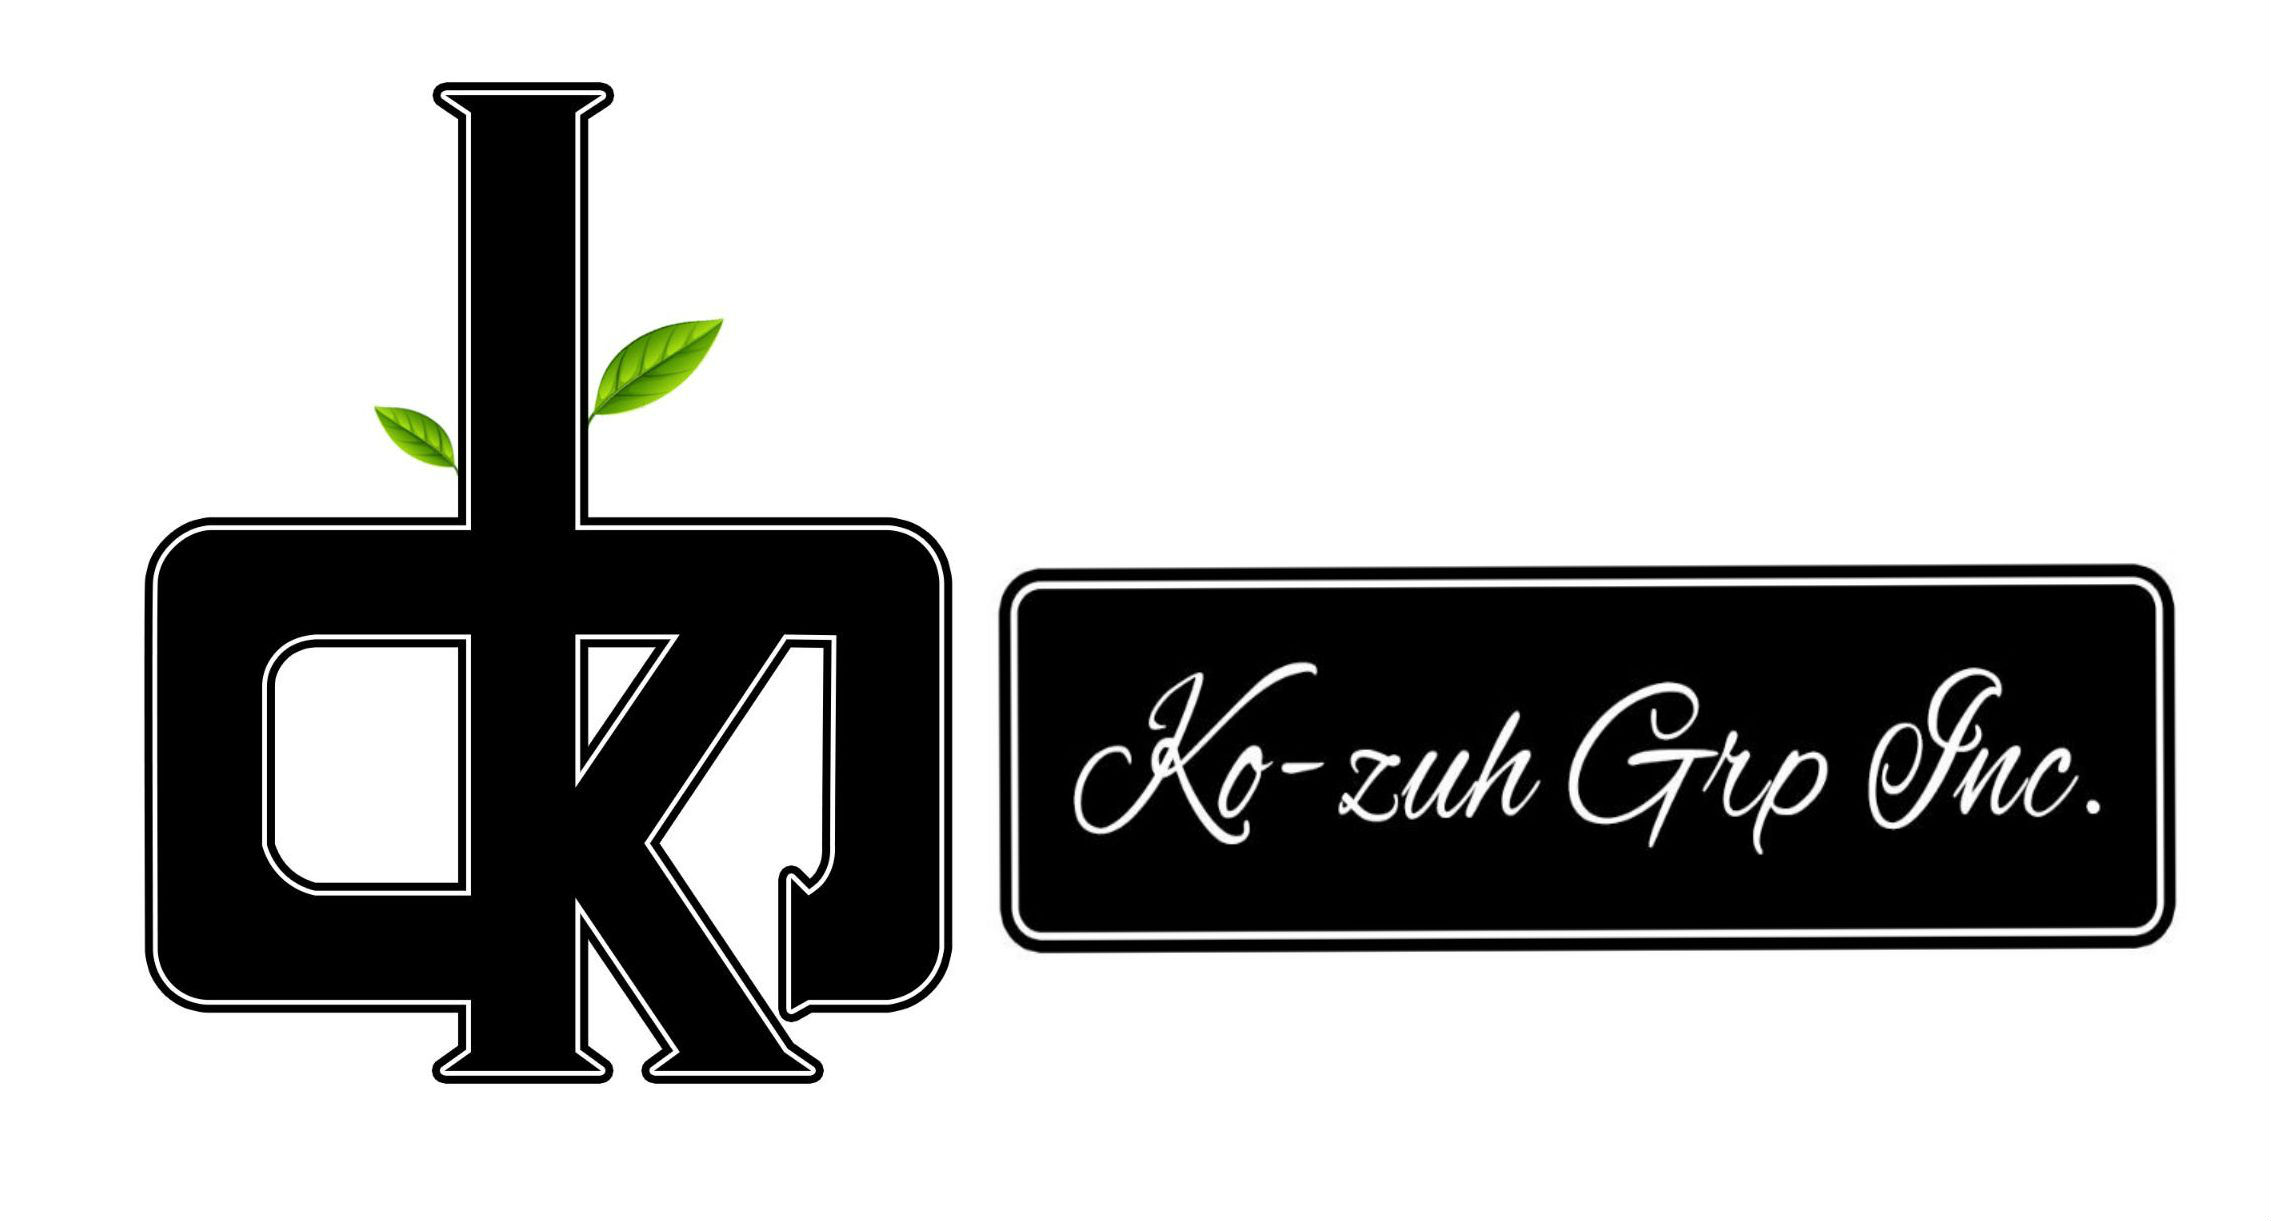 Kozuh Group Inc